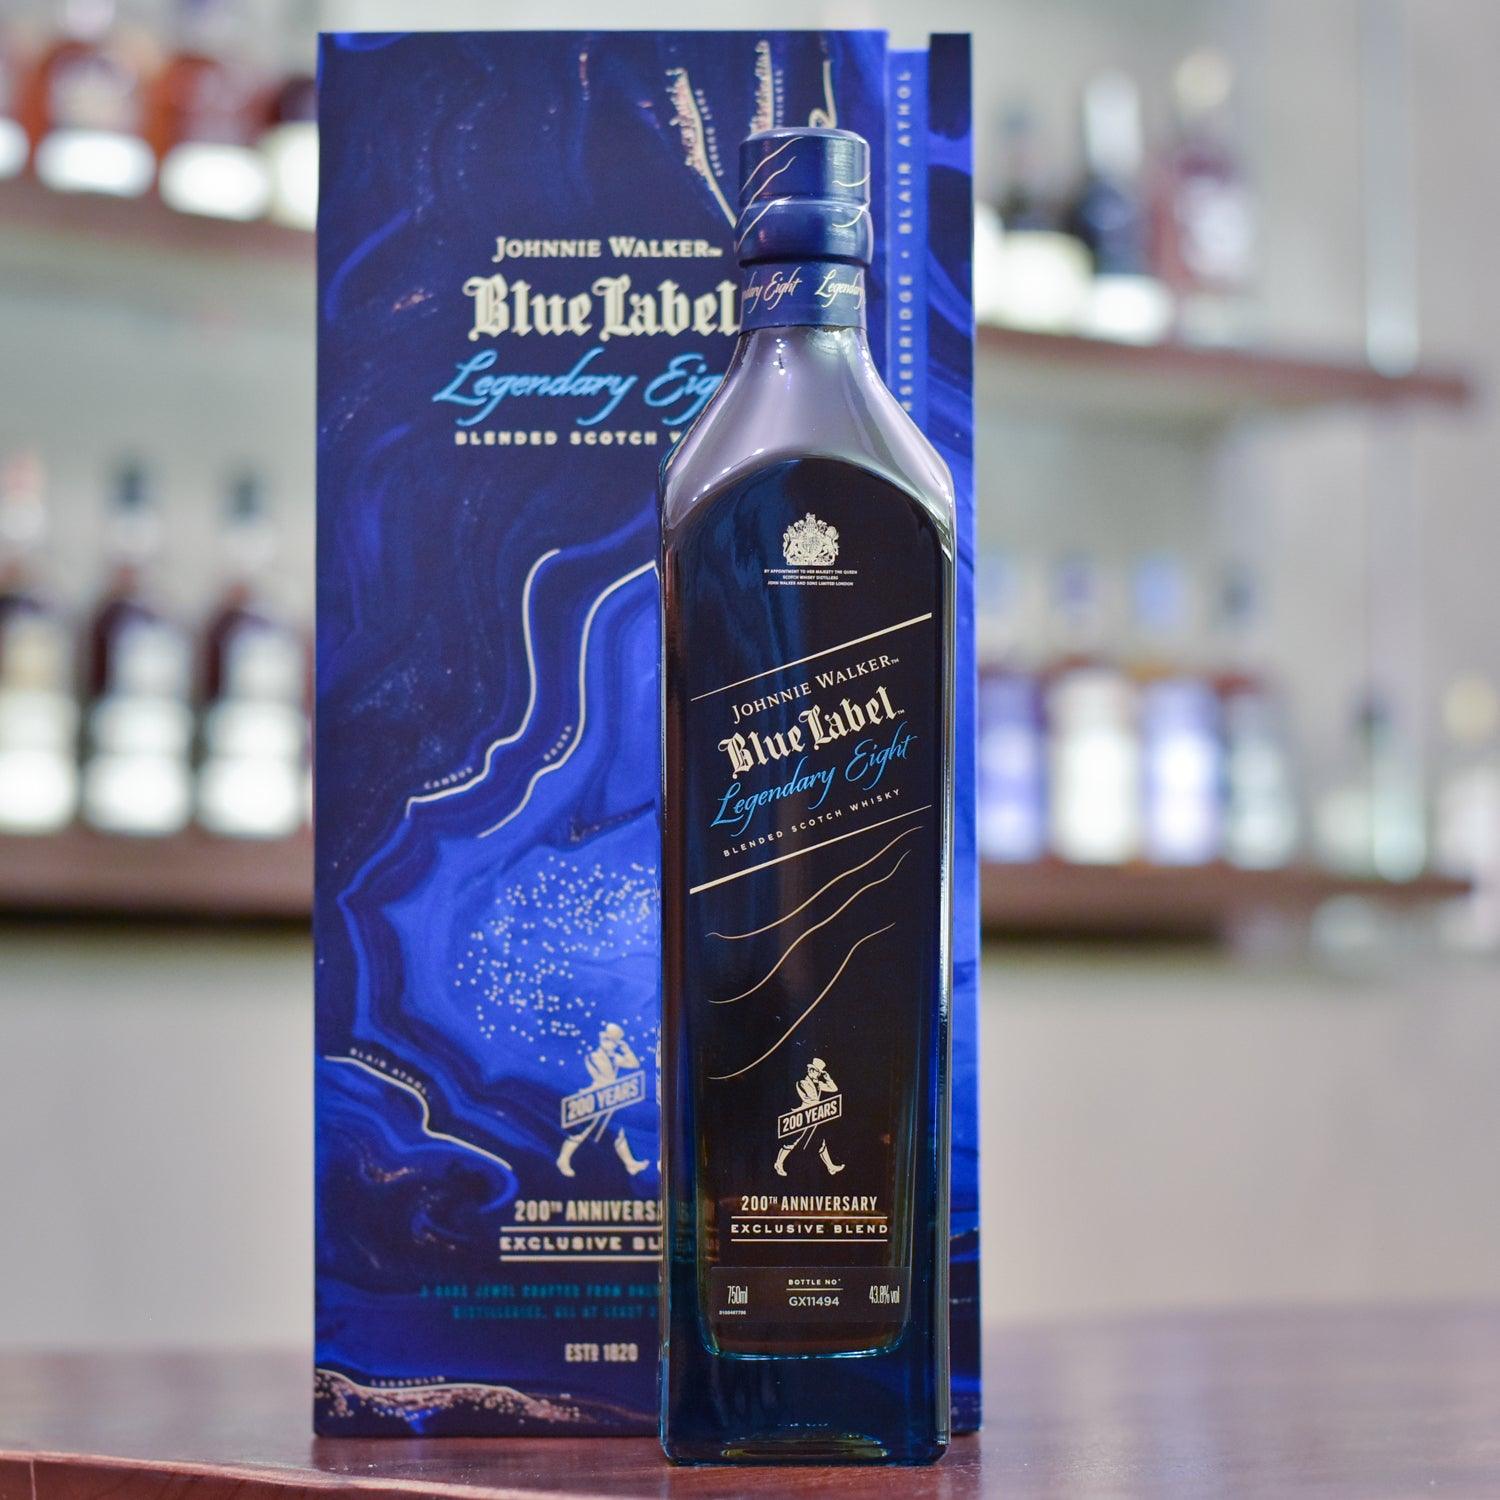 Johnnie Walker Blue Label Legendary Eight 200th Anniversary Exclusive Blend - The Rare Malt